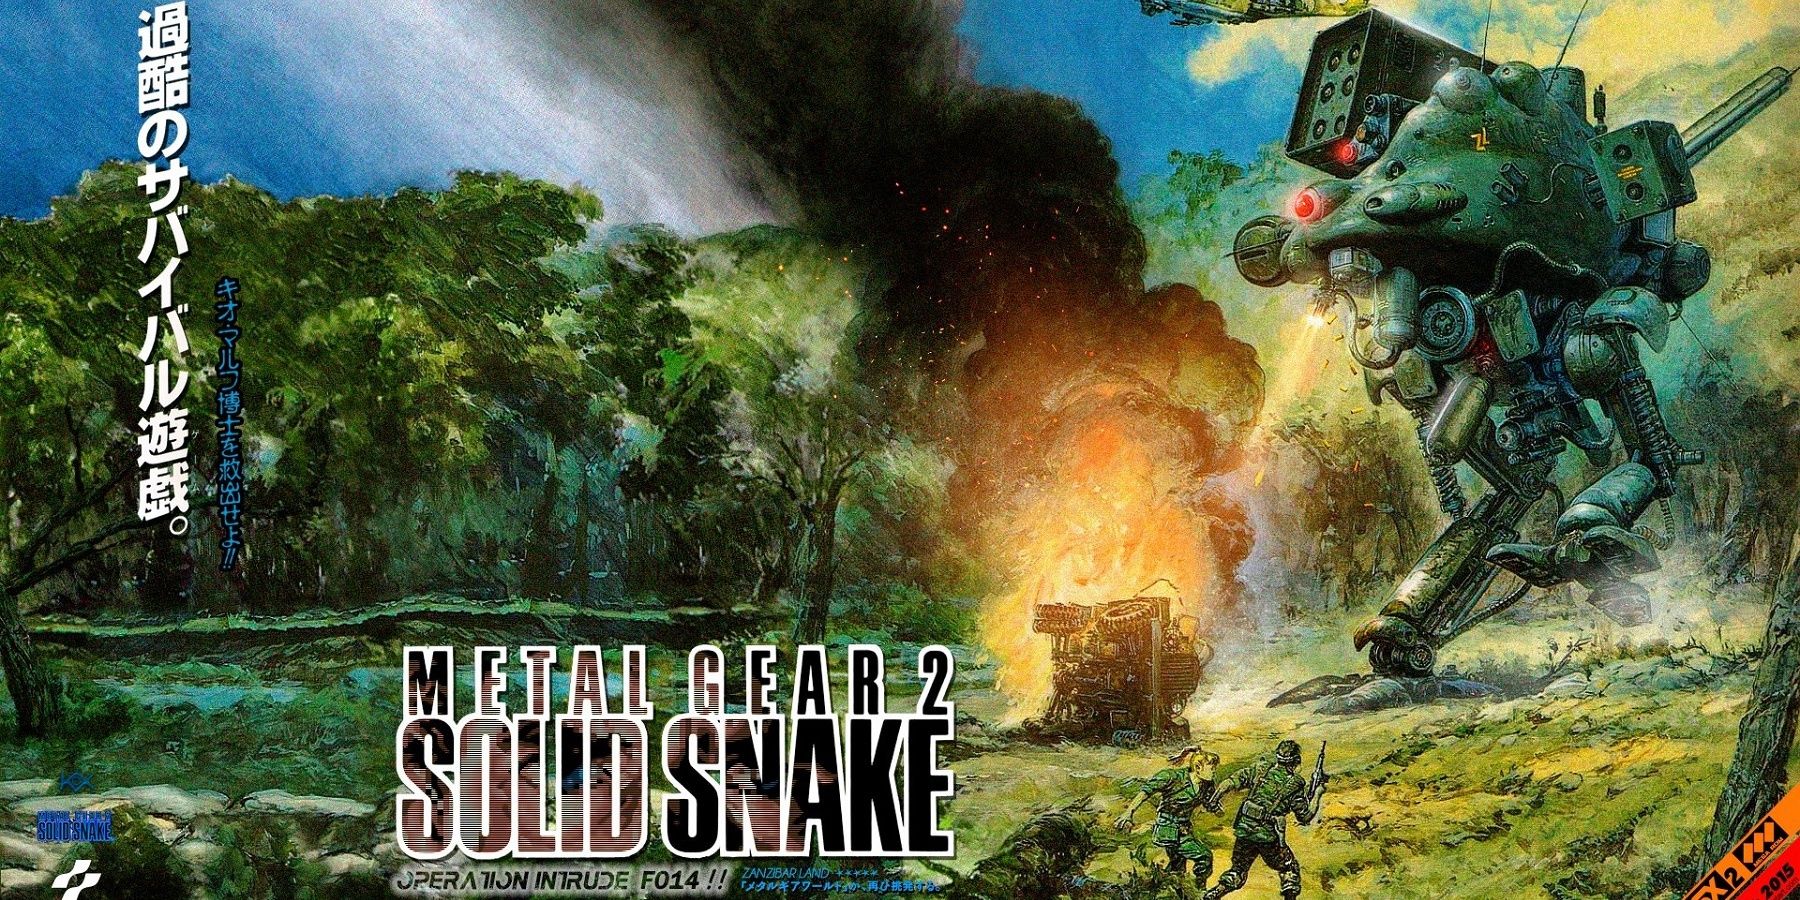 Best Hideo Kojima Games- Metal Gear 2